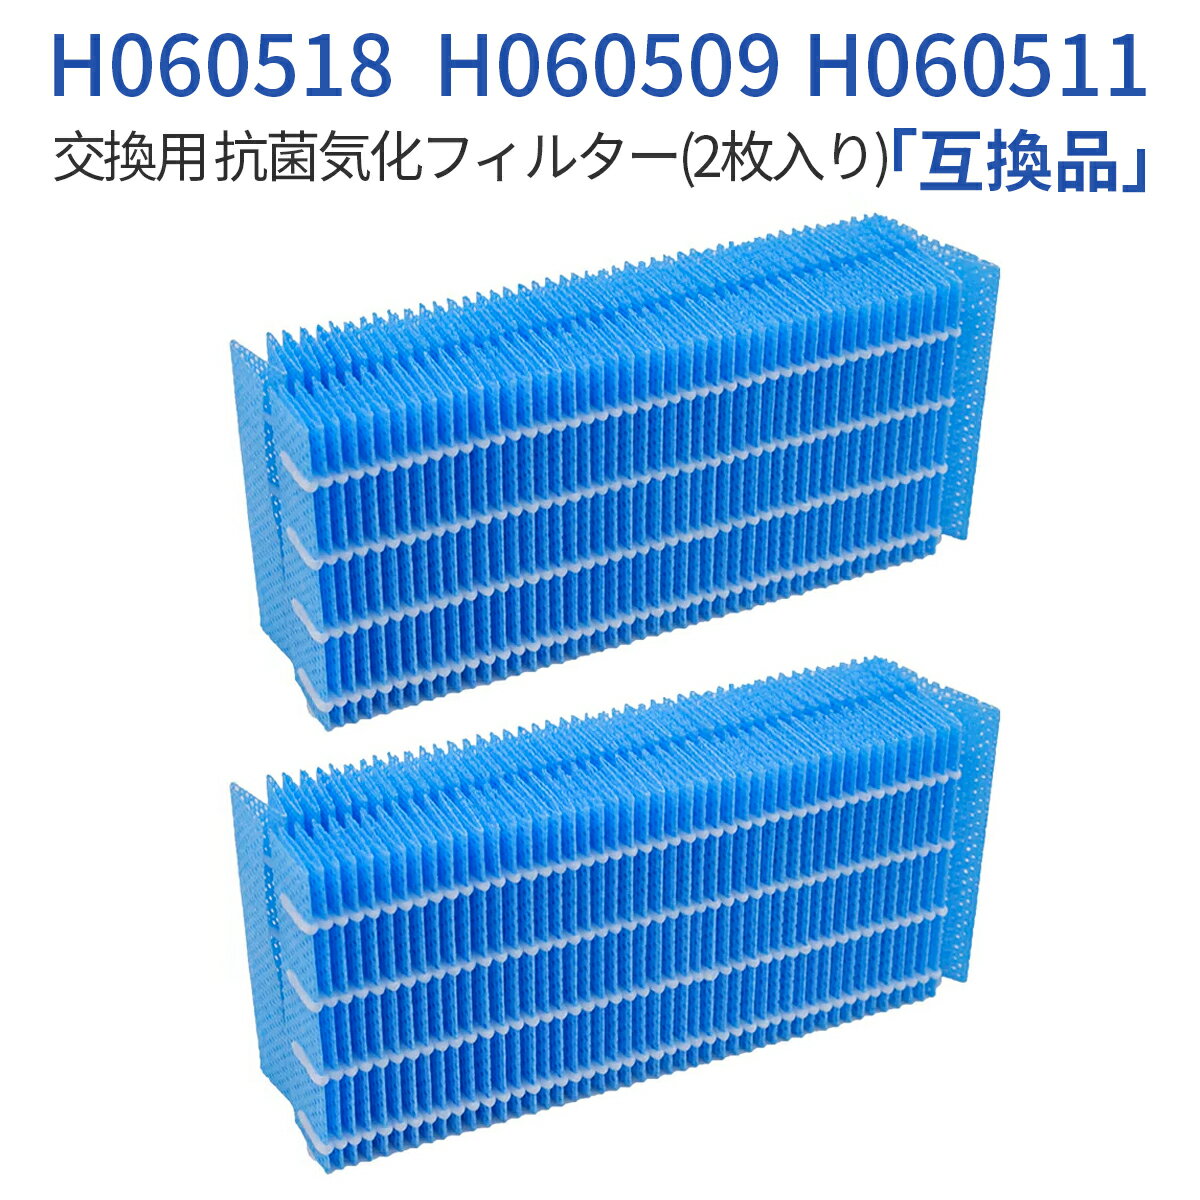 H060518 加湿器 抗菌気化フィルター h060518 ダイニチ 気化式加湿機 交換用 h060509 h060511 フィルター（2枚入り）純正品ではなく互換品です